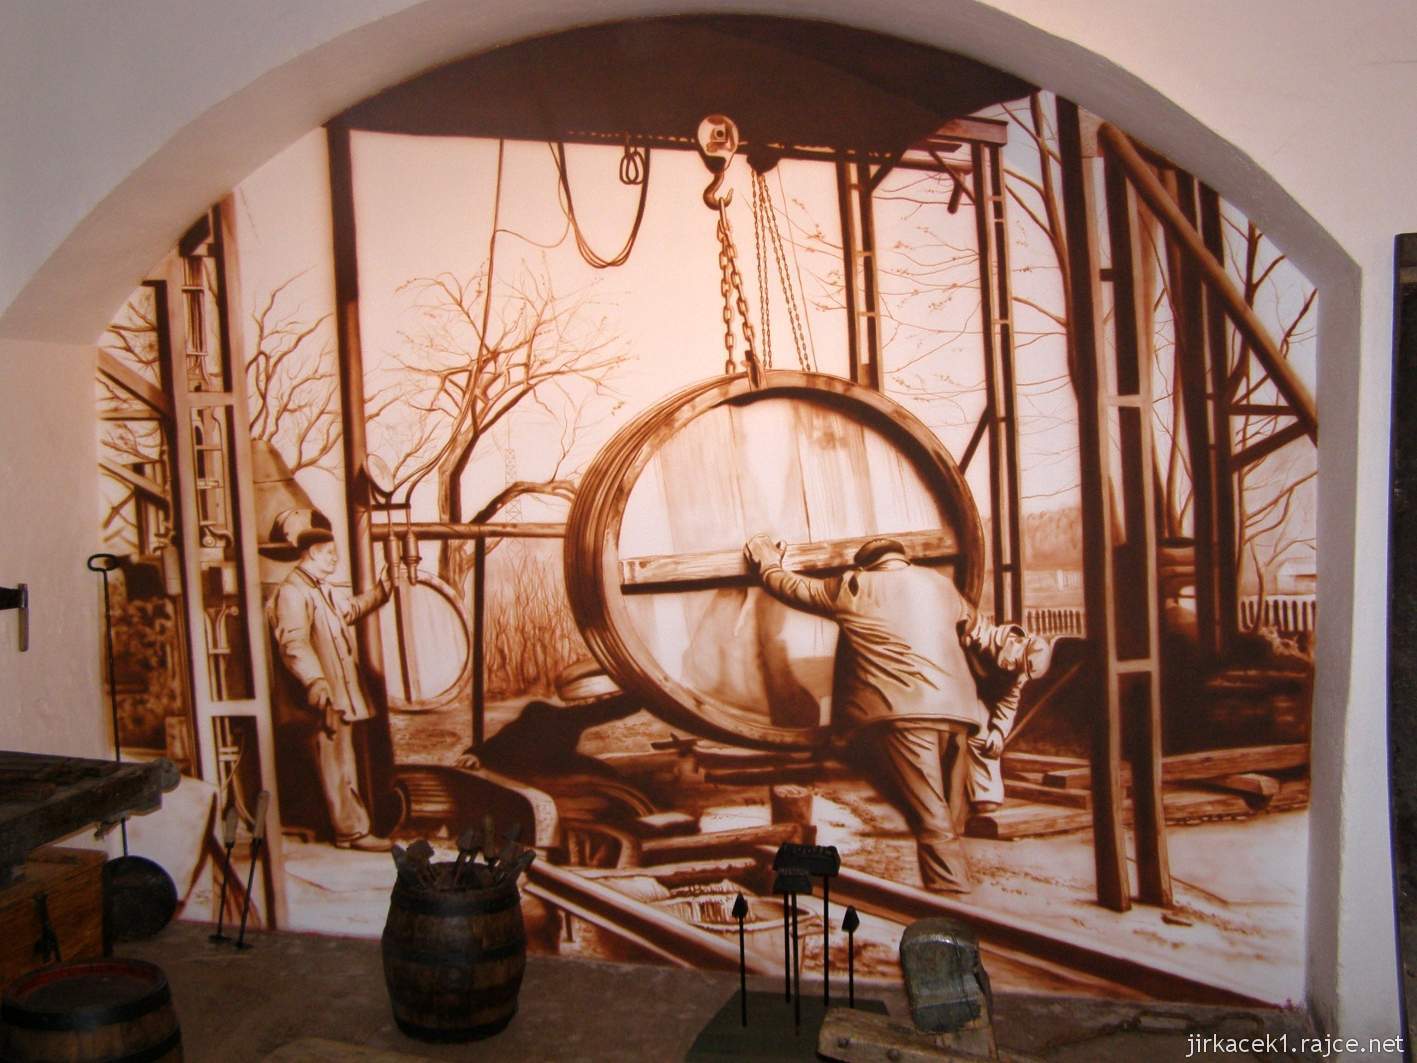 Pivovar Litovel 37 - pivovarské muzeum